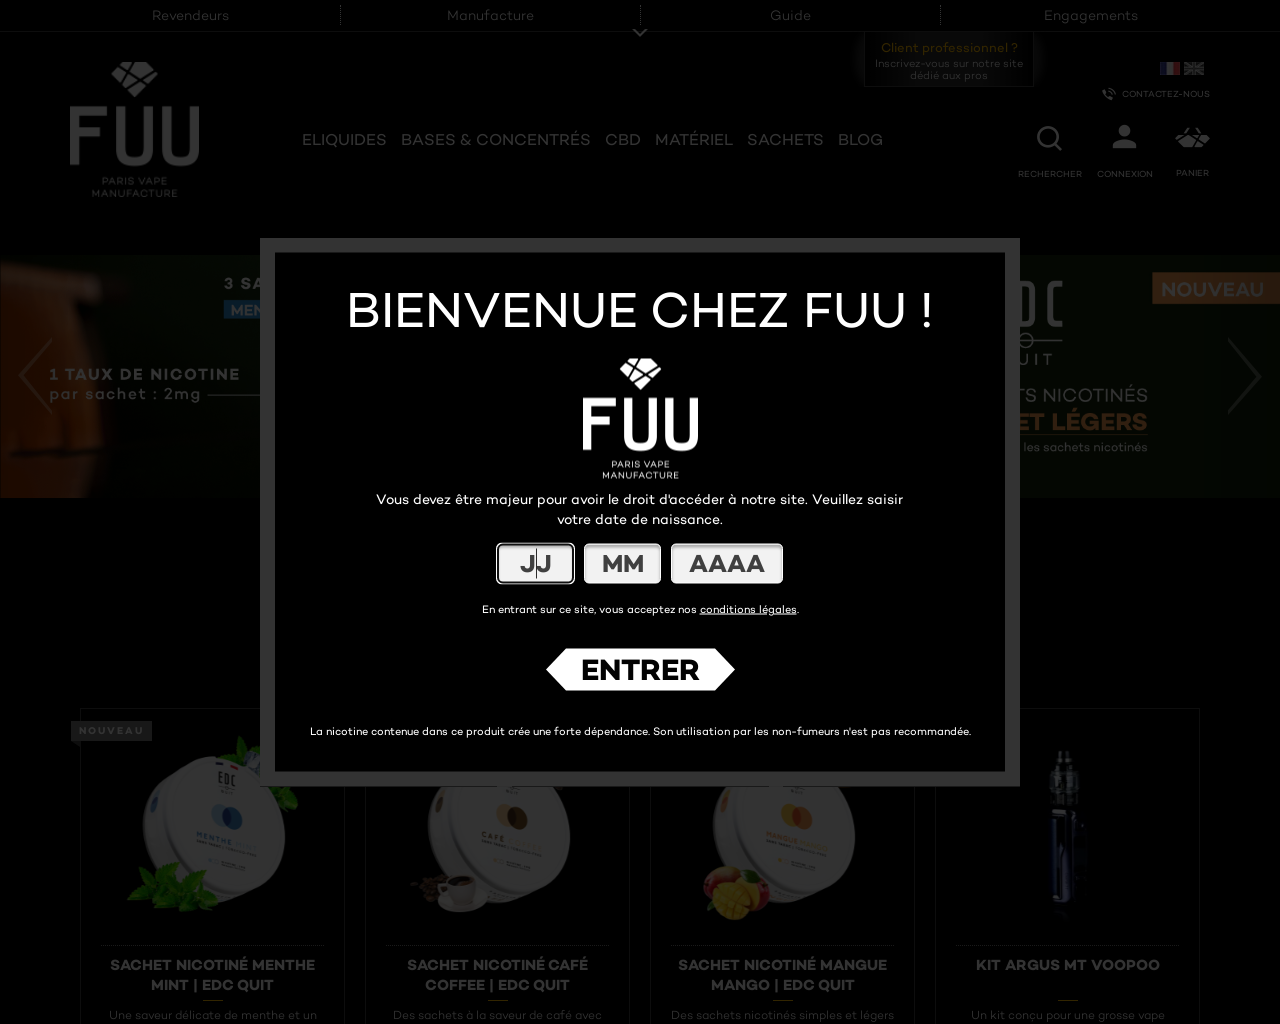 thefuu.com